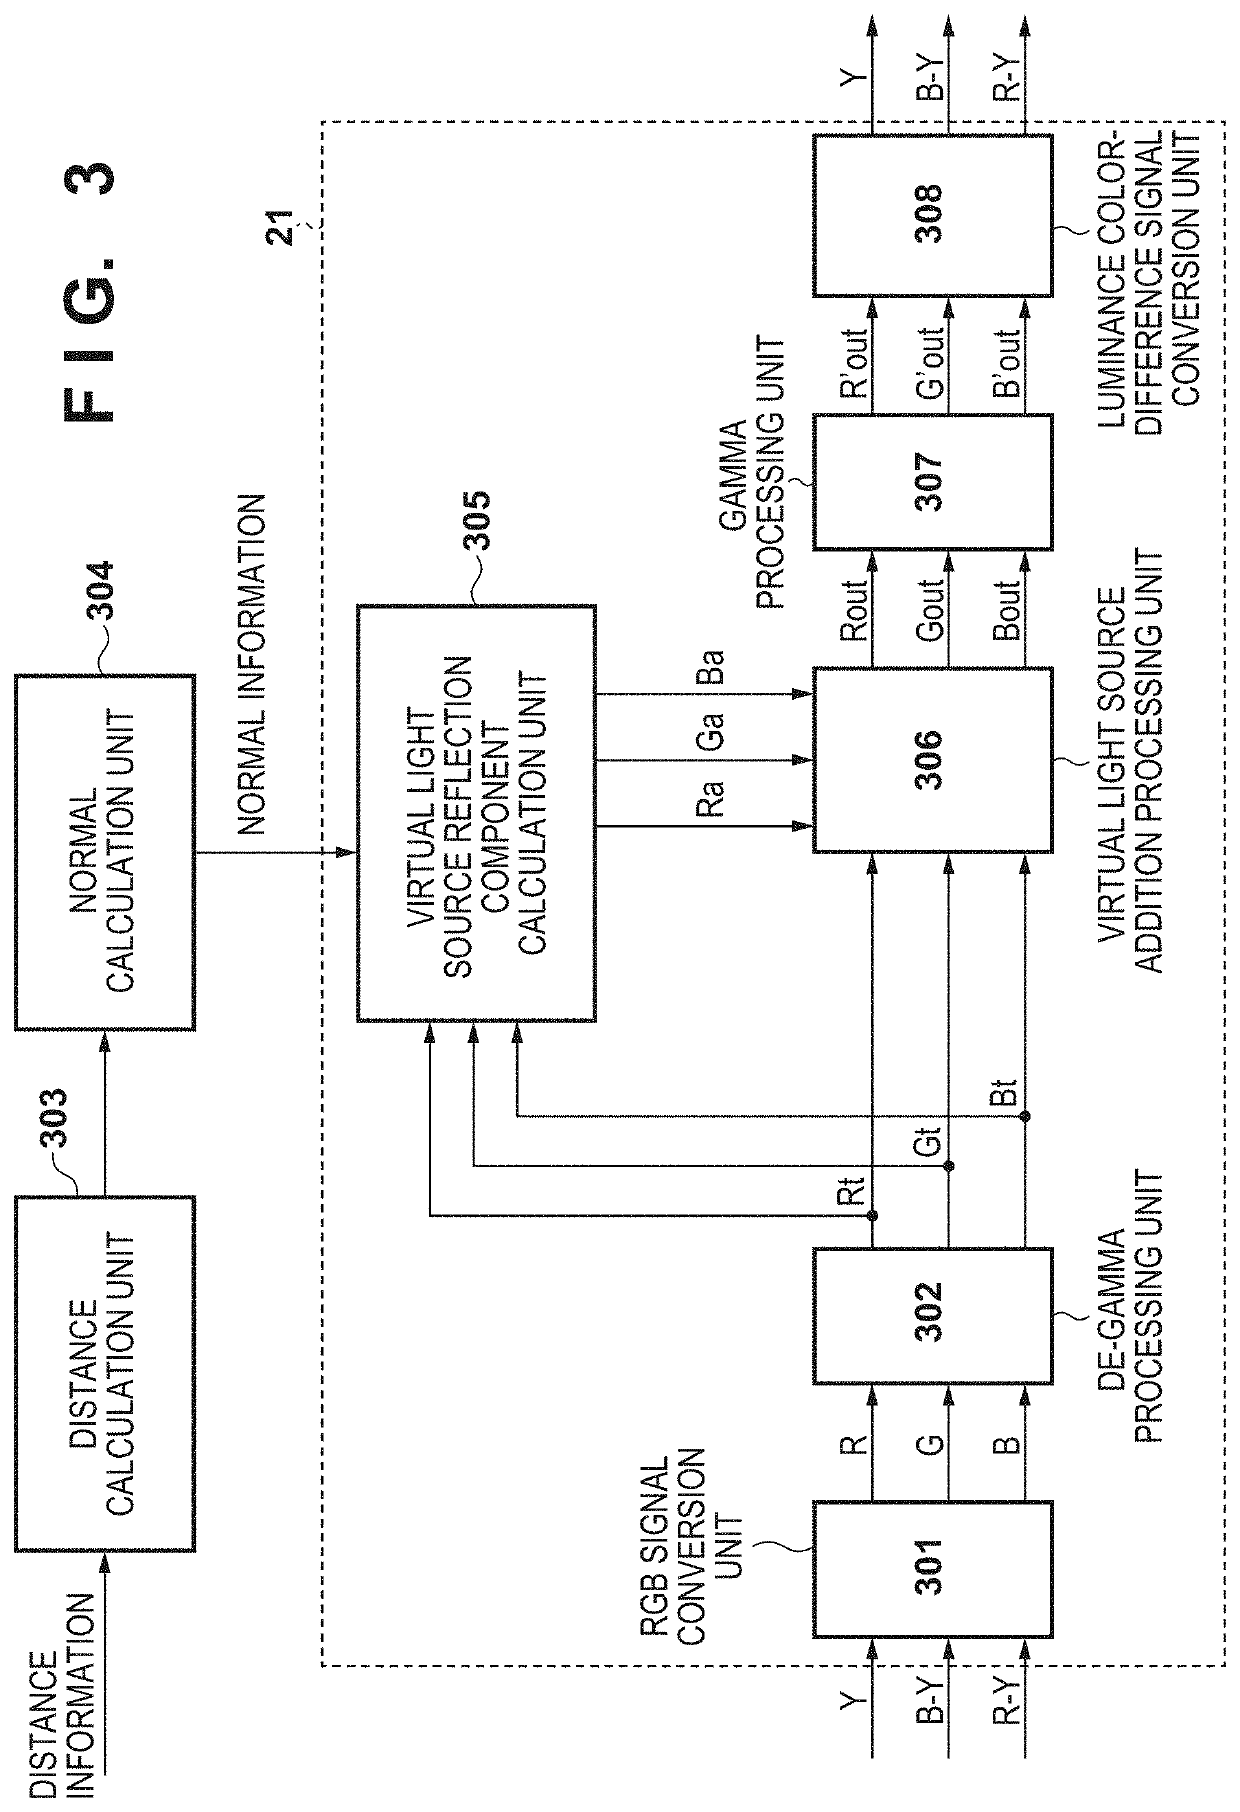 Image processing apparatus, method of controlling the same, image capturing apparatus, and storage medium